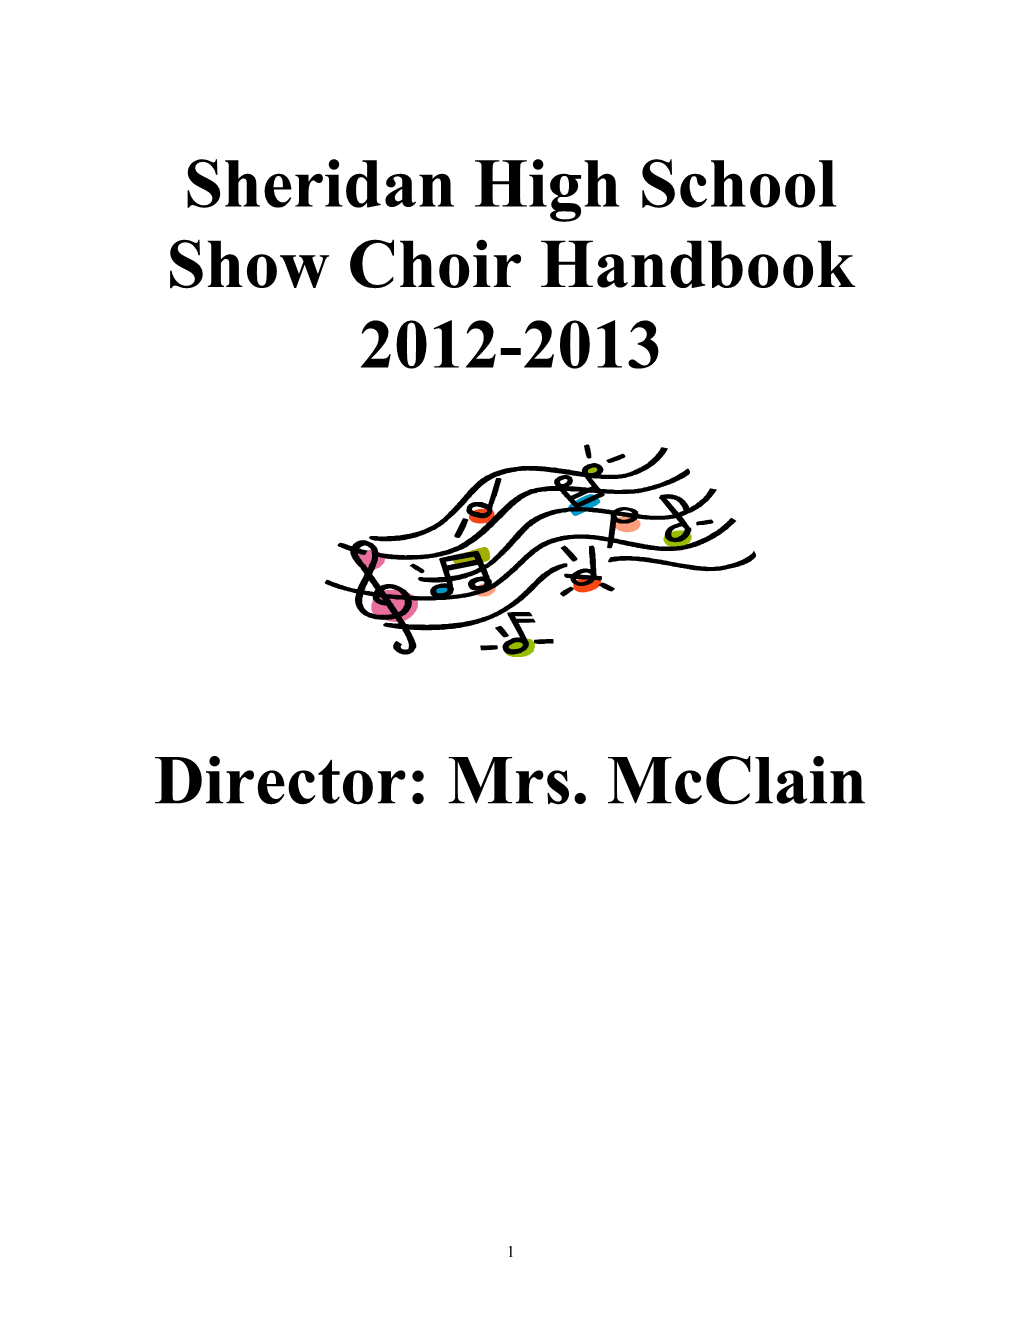 Sheridan High School Show Choir Handbook 2012-2013